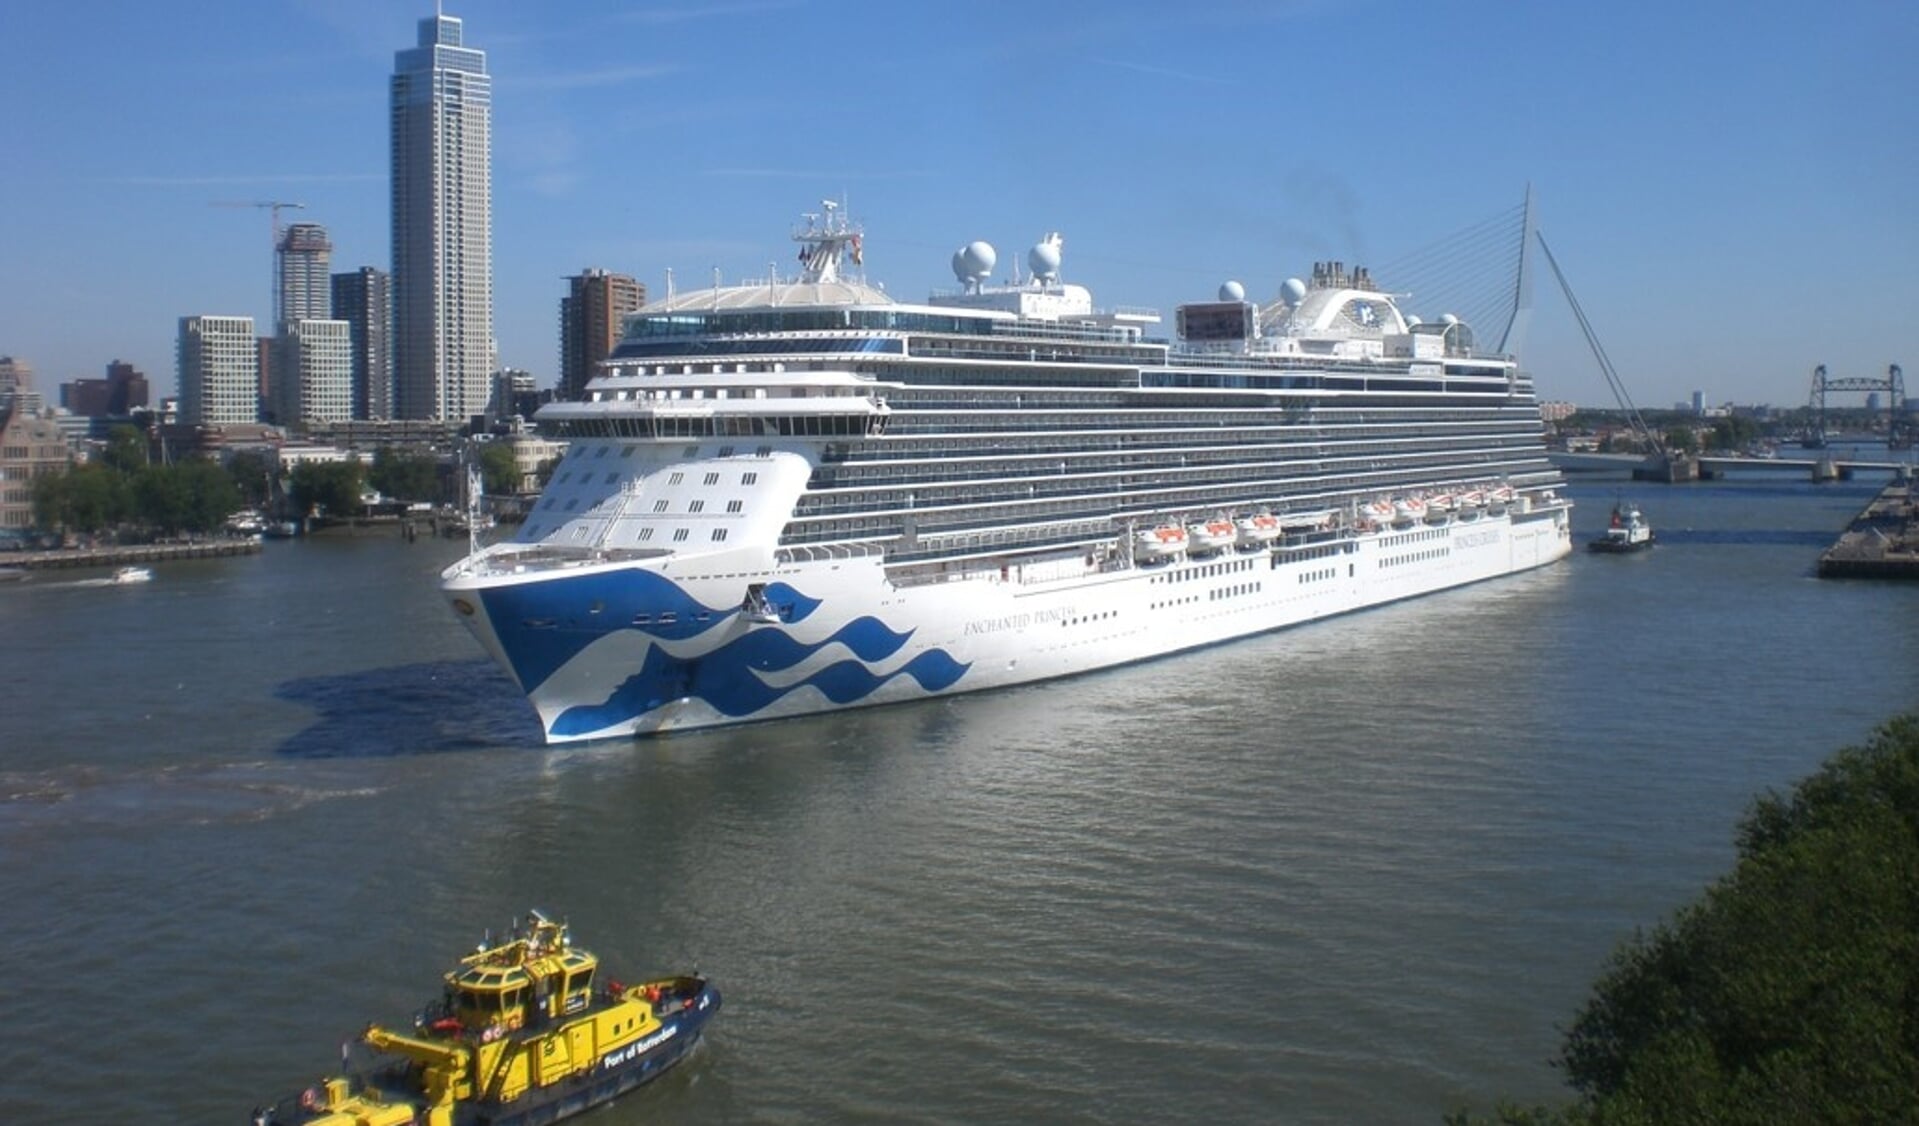 Het Royal-class cruiseschip Enchanted Princess arriveert in Rotterdam. Foto: Dick van Bergem